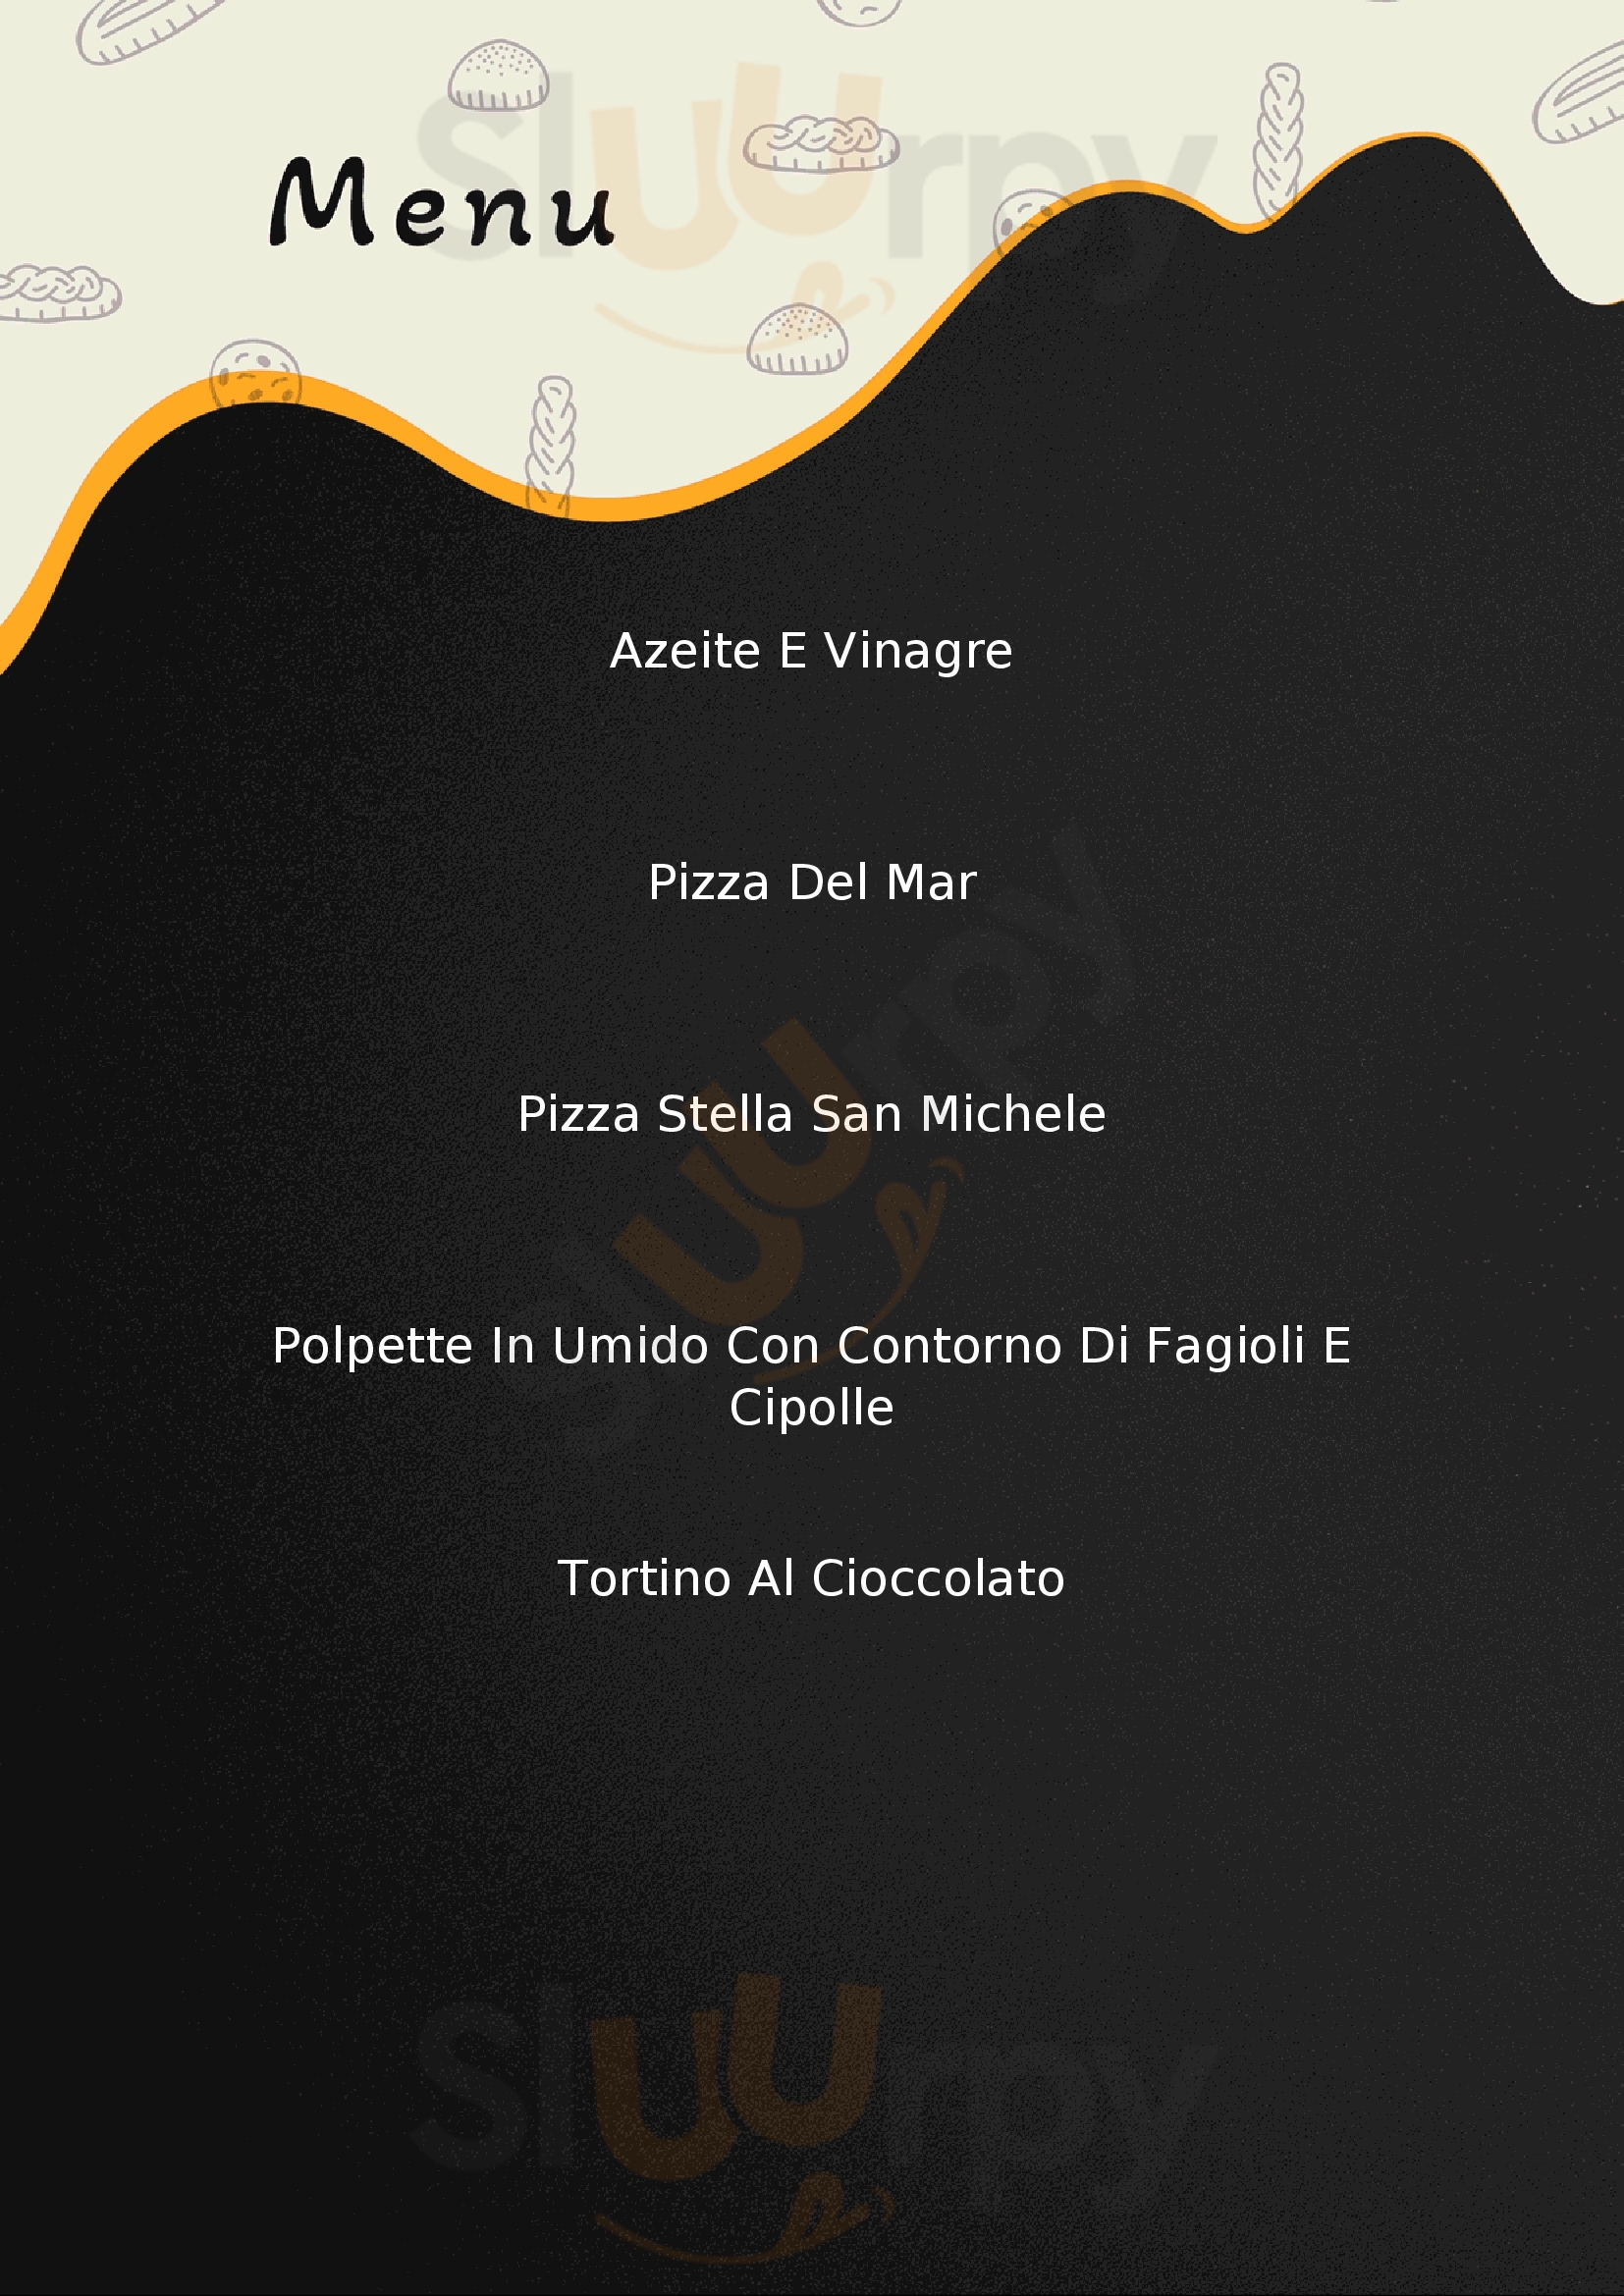 Trattori-Pizzeria San Michele Magnago menù 1 pagina